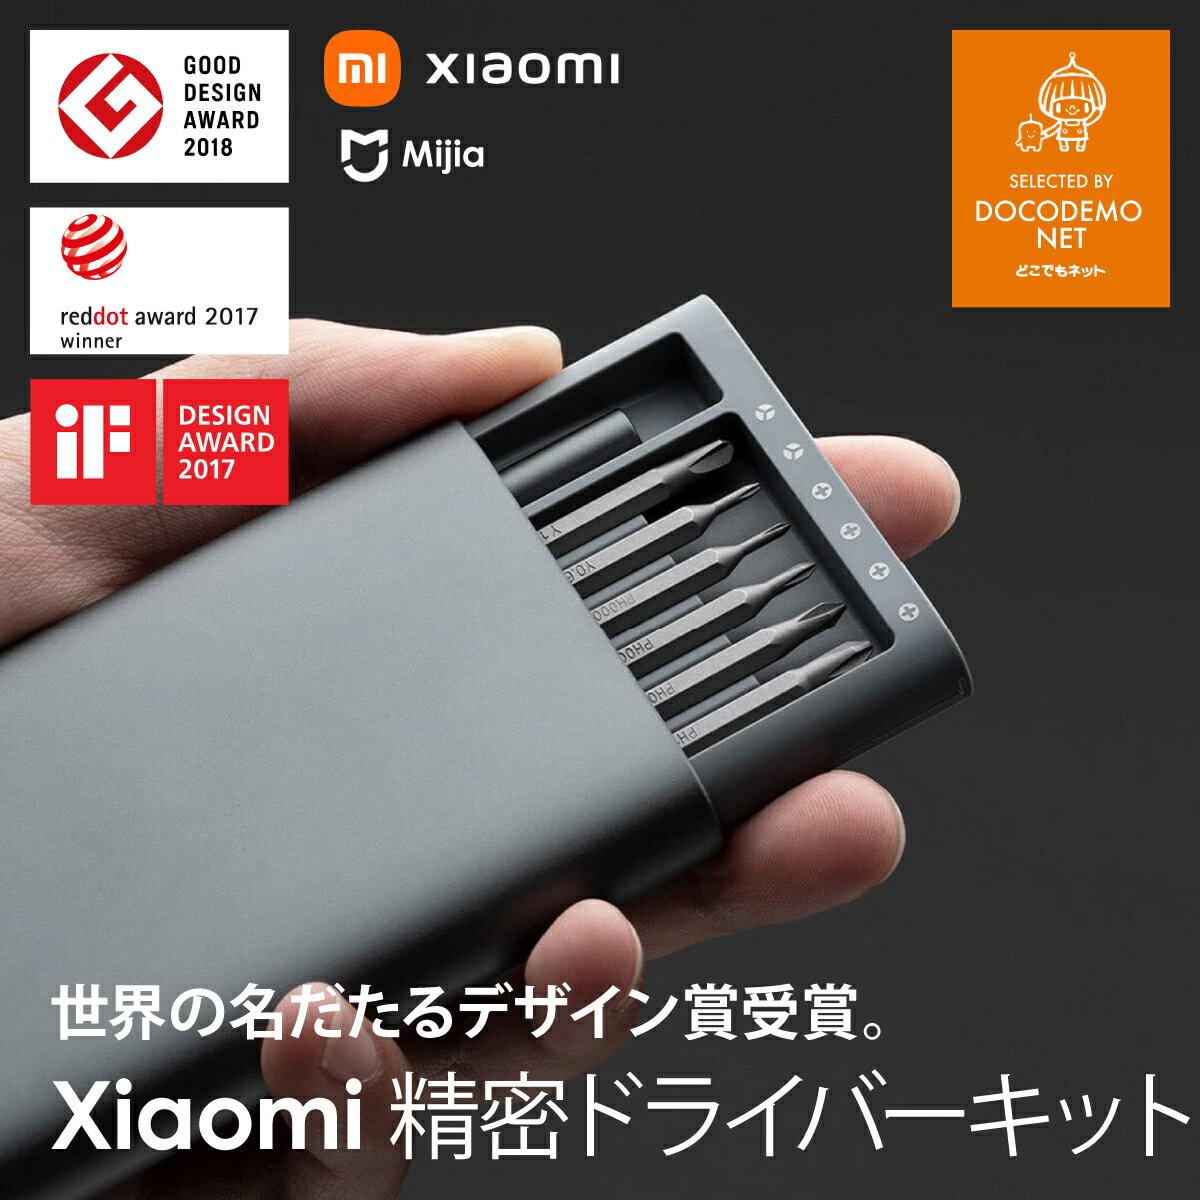 Xiaomi Mijia 24本 ドライバー セット アルミ合金シェル 高級感 軽量 24本組 精密ドライバー 磁気ウィスカー収納 持ち運び便利 デザイン受賞 PR-MI24 DRIVER 磁気 修理ツール 六角 Y型 三角ネ…